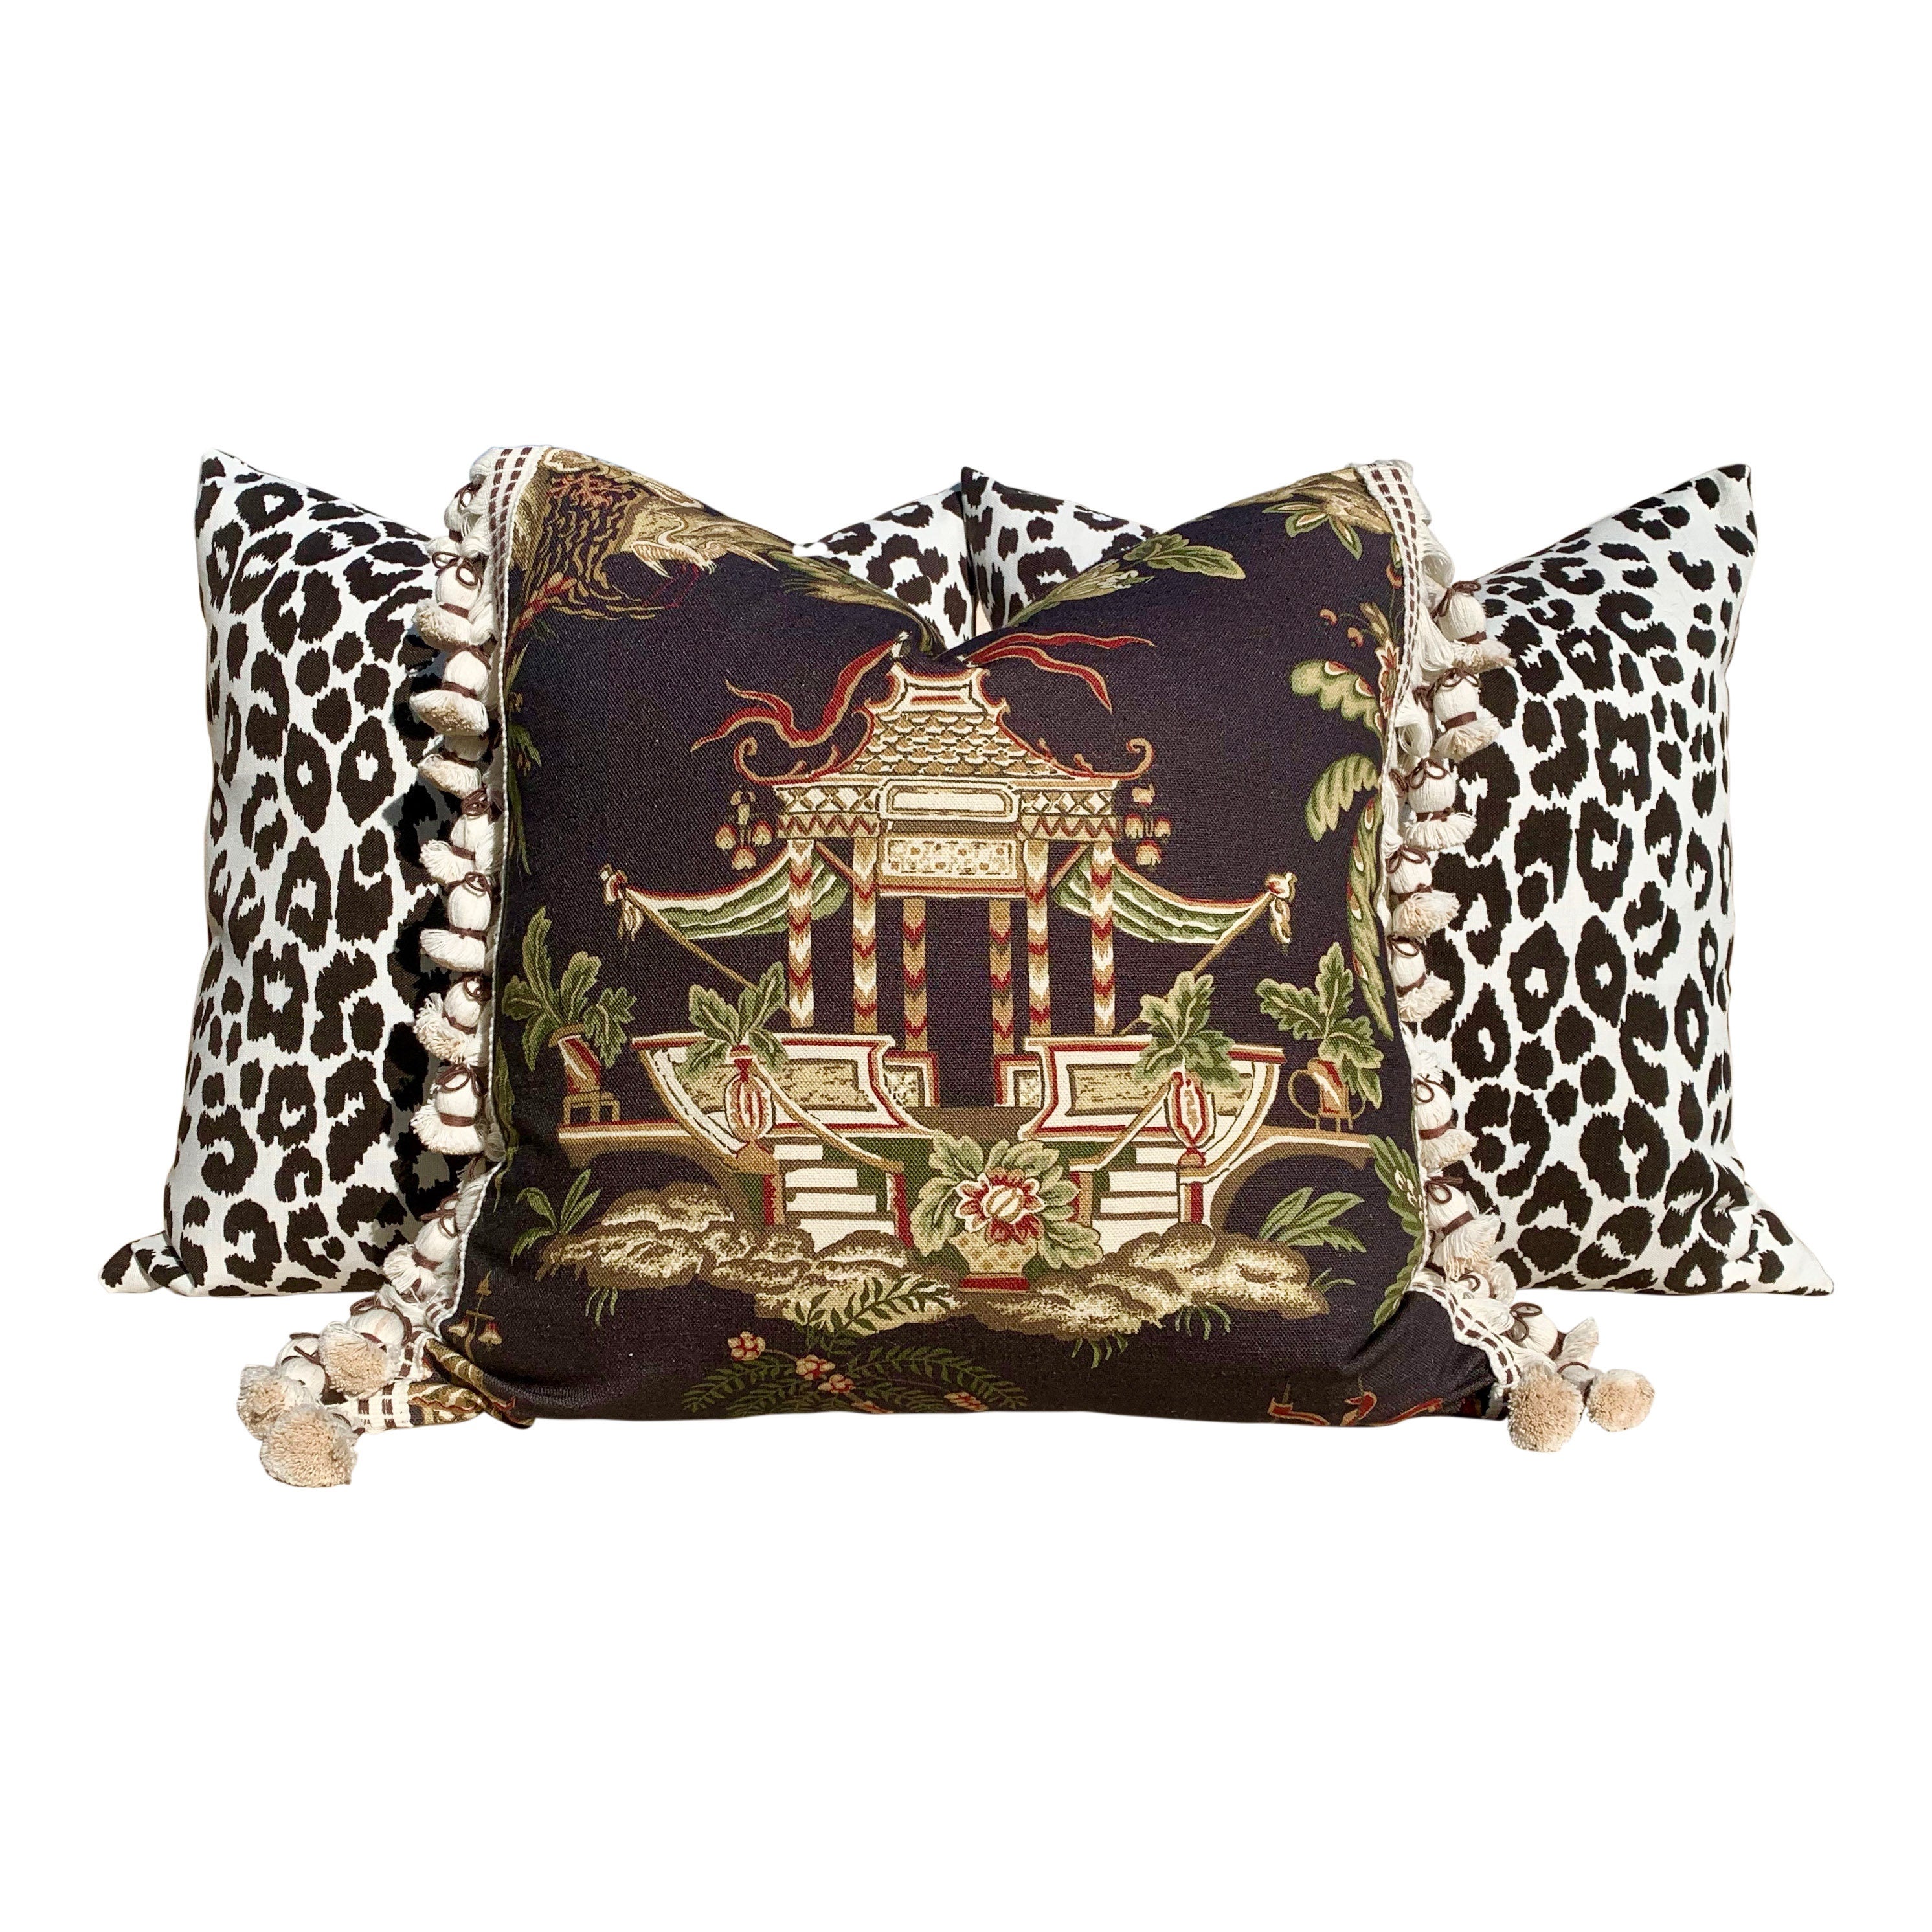 Schumacher Iconic Leopard Pillow in Charcoal. Indoor/Outdoor Pillow.